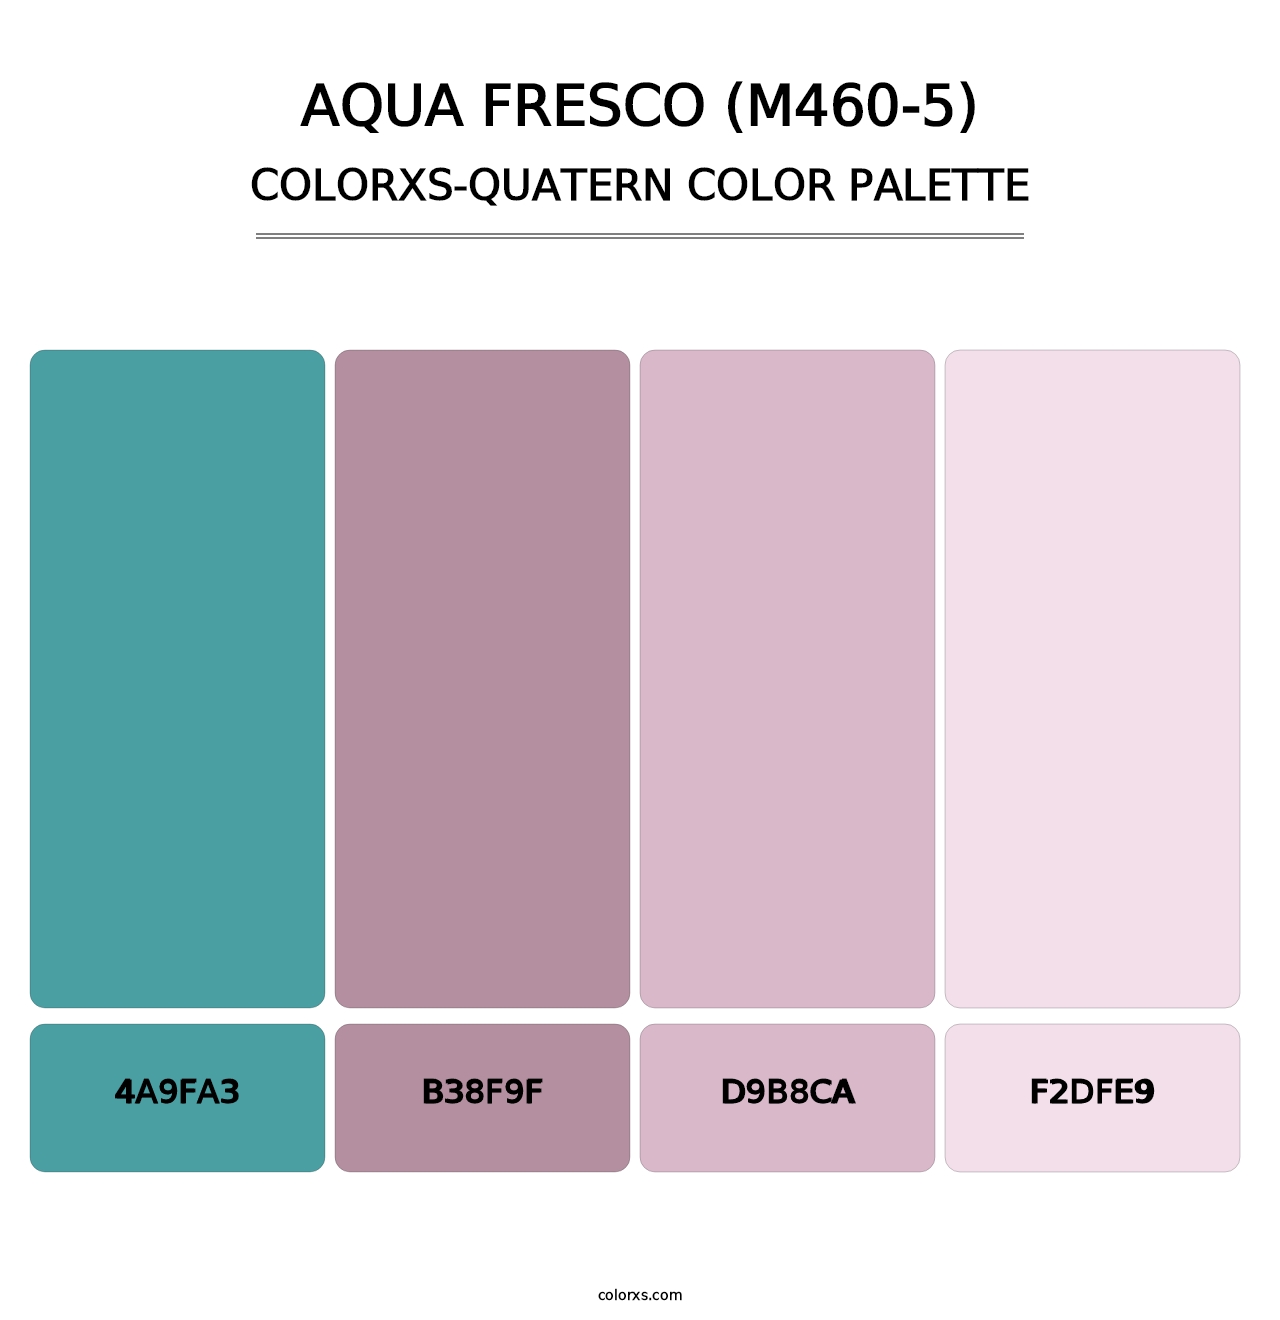 Aqua Fresco (M460-5) - Colorxs Quatern Palette